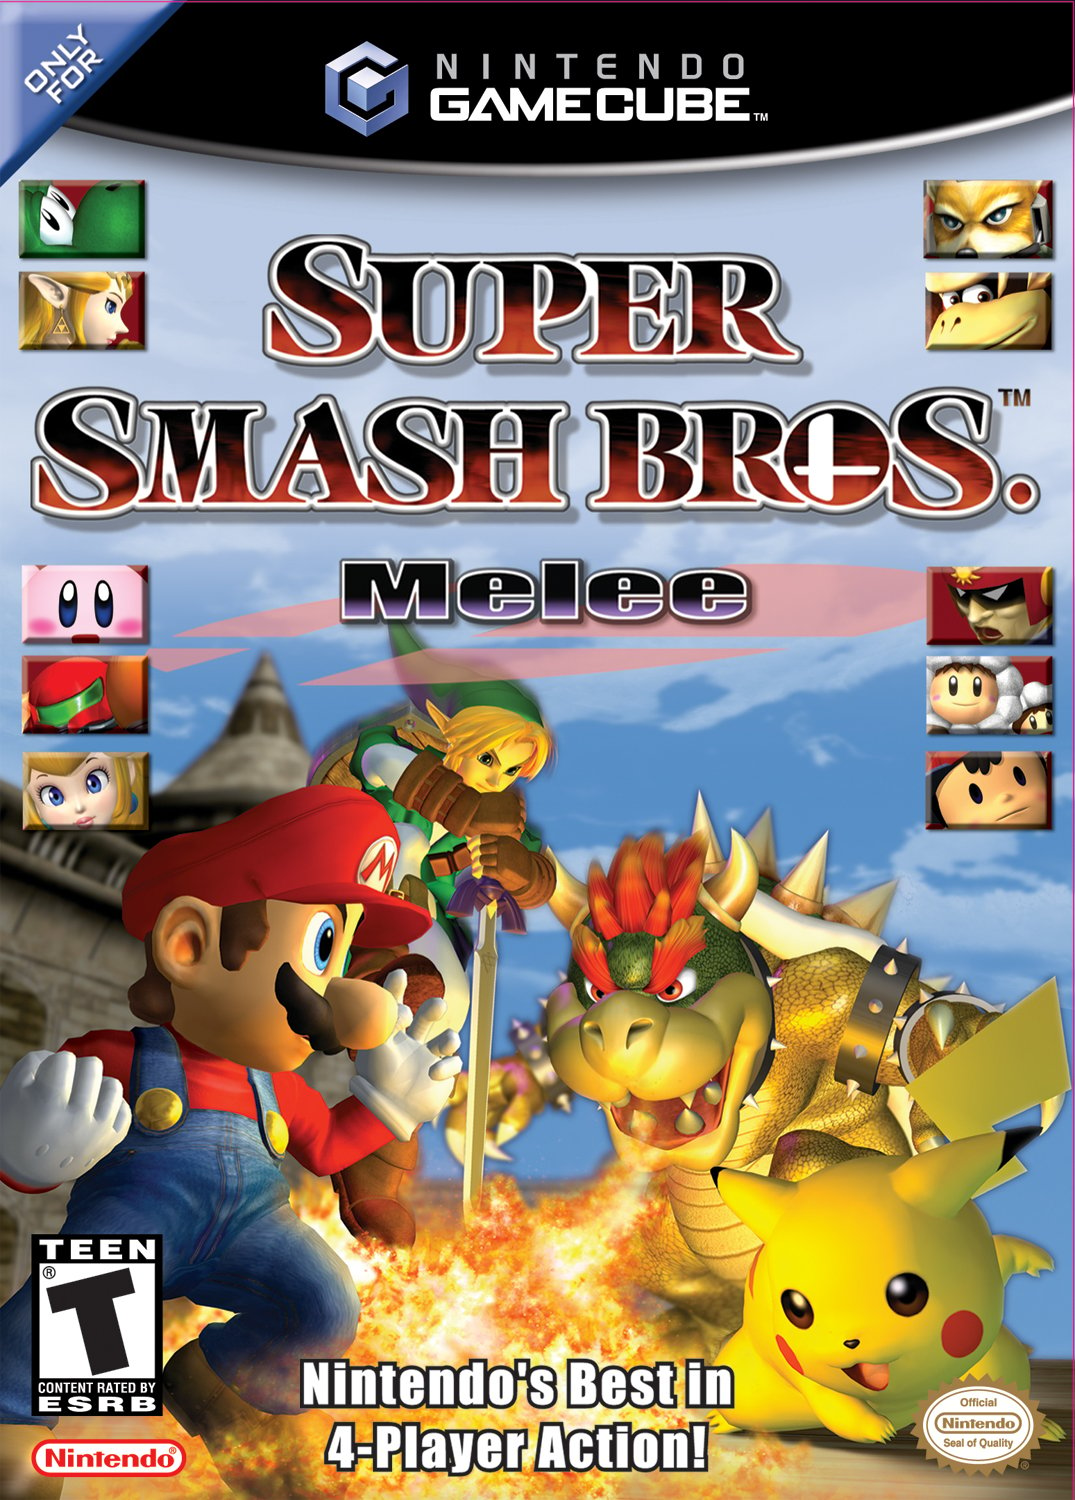 Super Smash Bros. for Nintendo 3DS and Wii U - Wikipedia